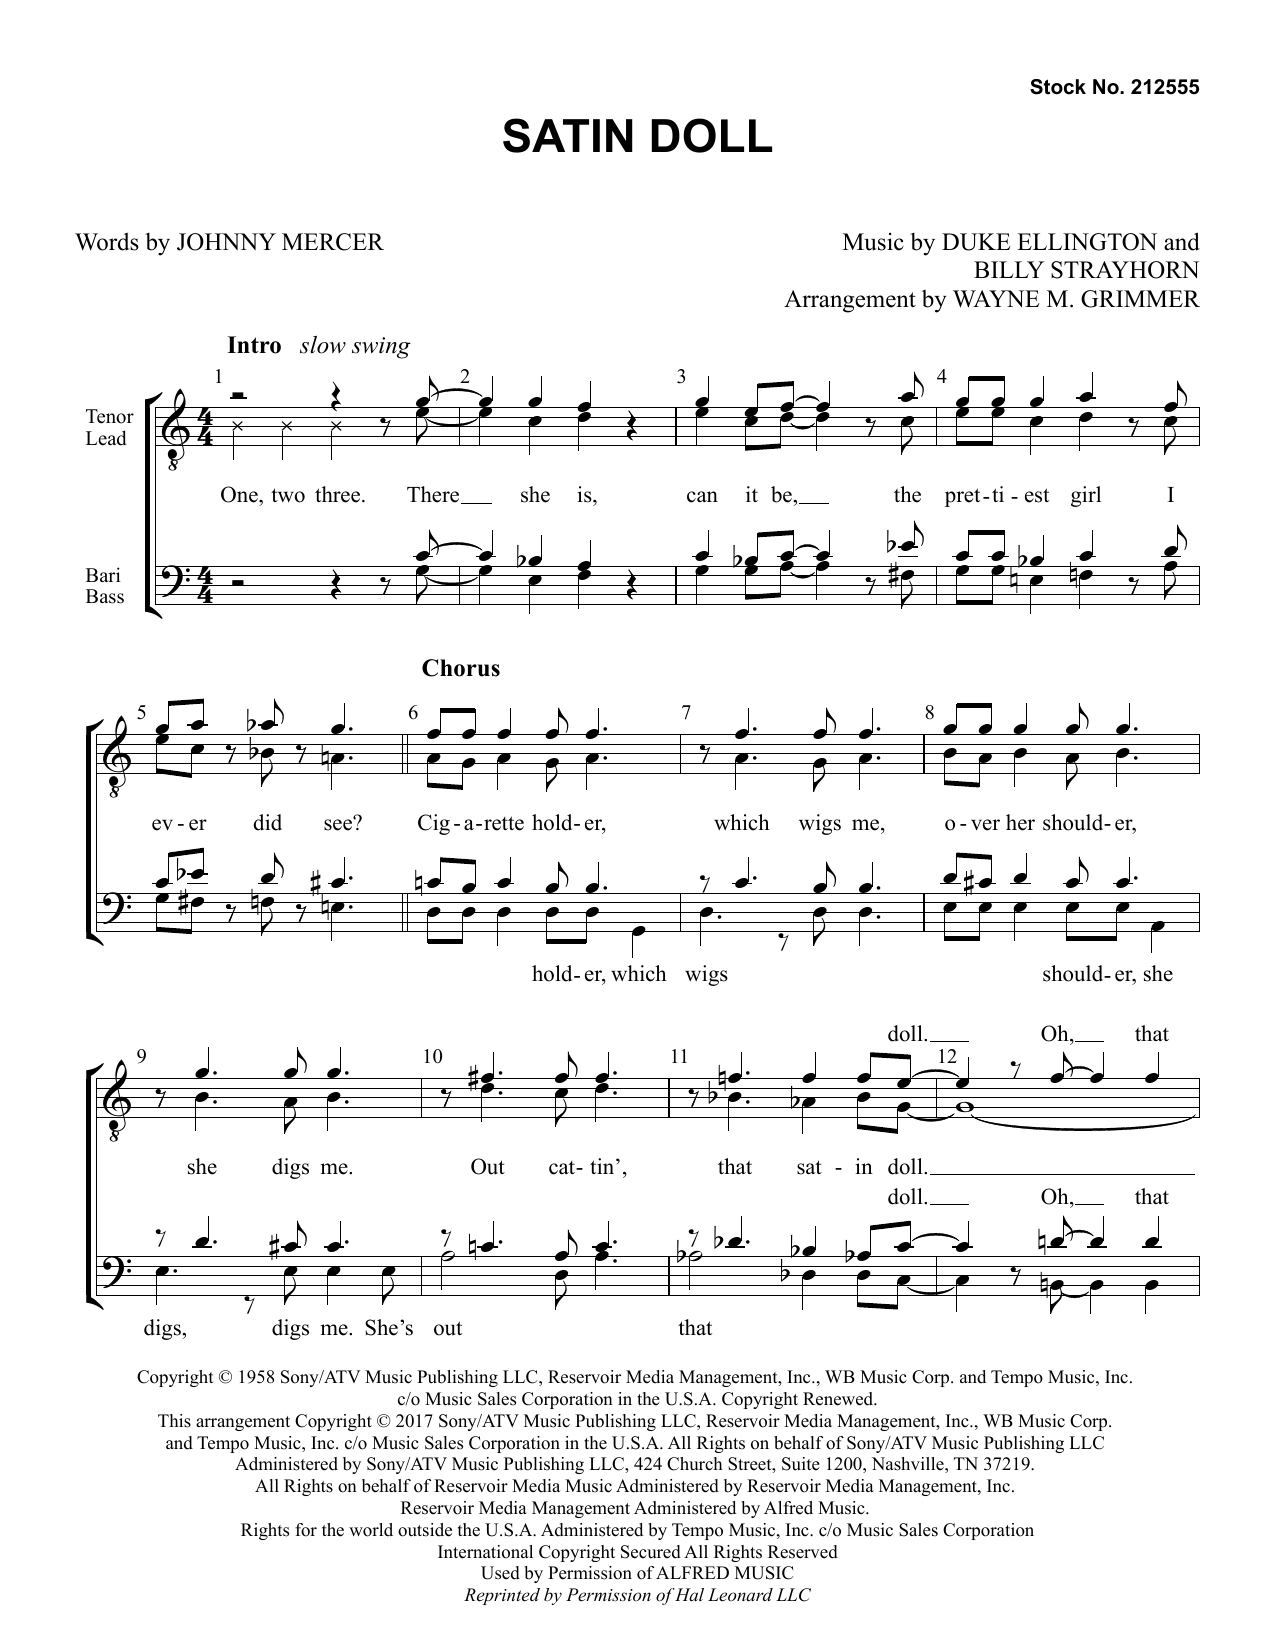 Johnny Mercer Satin Doll (arr. Wayne Grimmer) Sheet Music Notes & Chords for TTBB Choir - Download or Print PDF